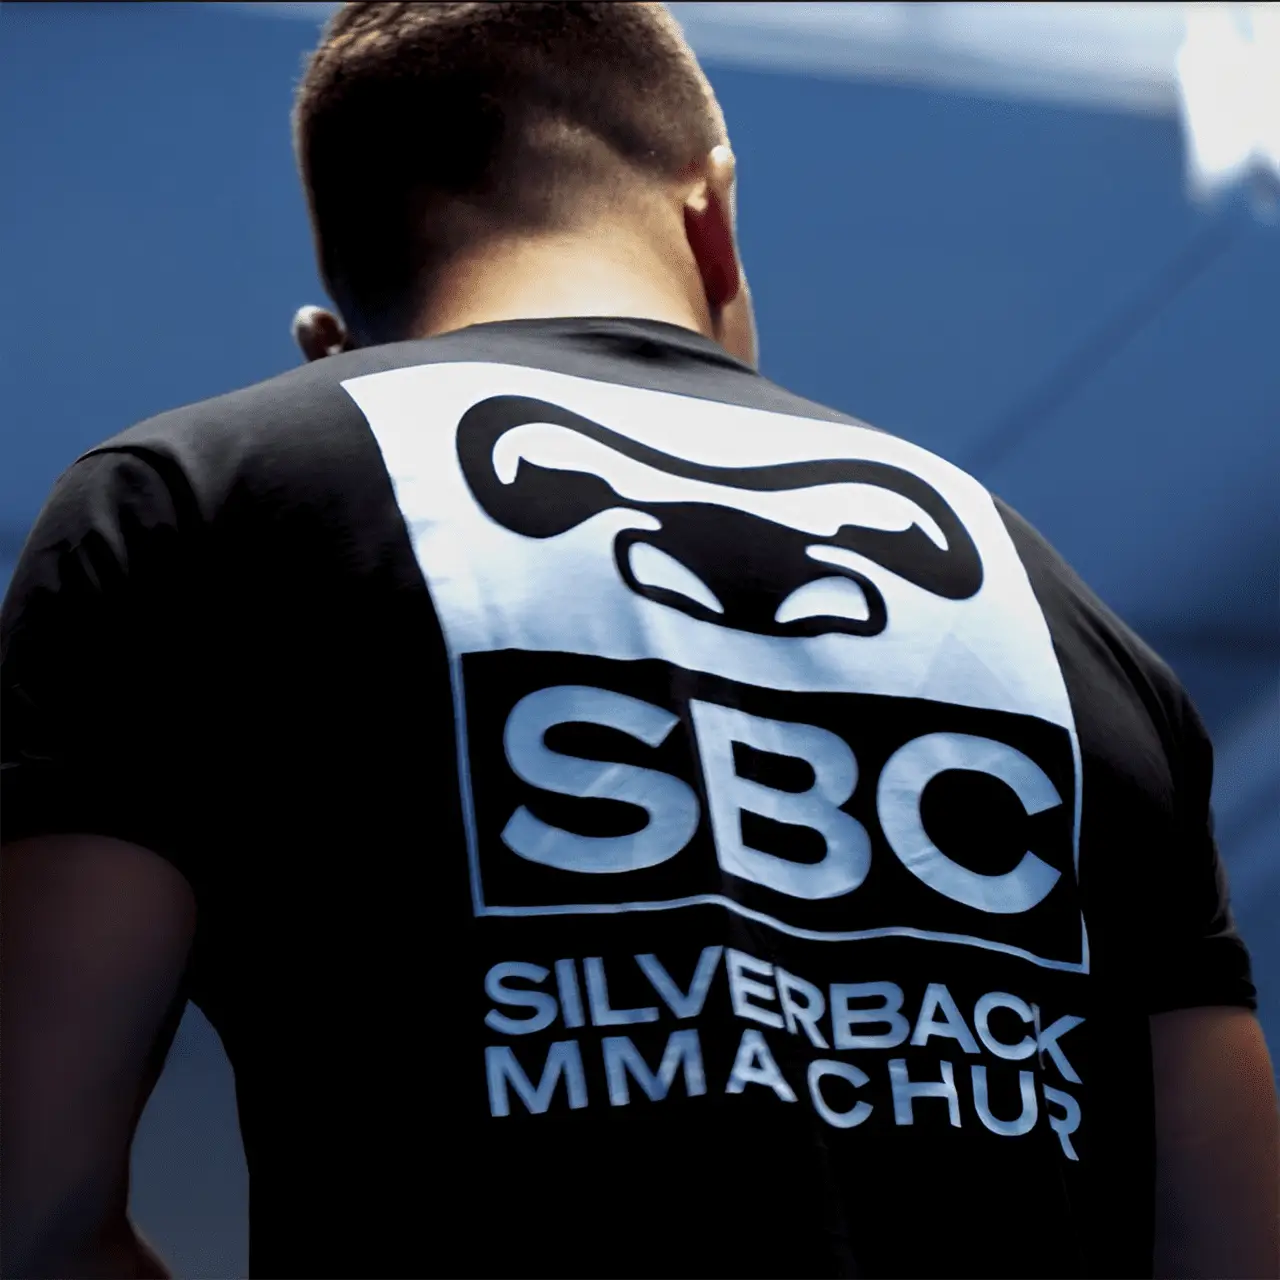 Silverback MMA Chur